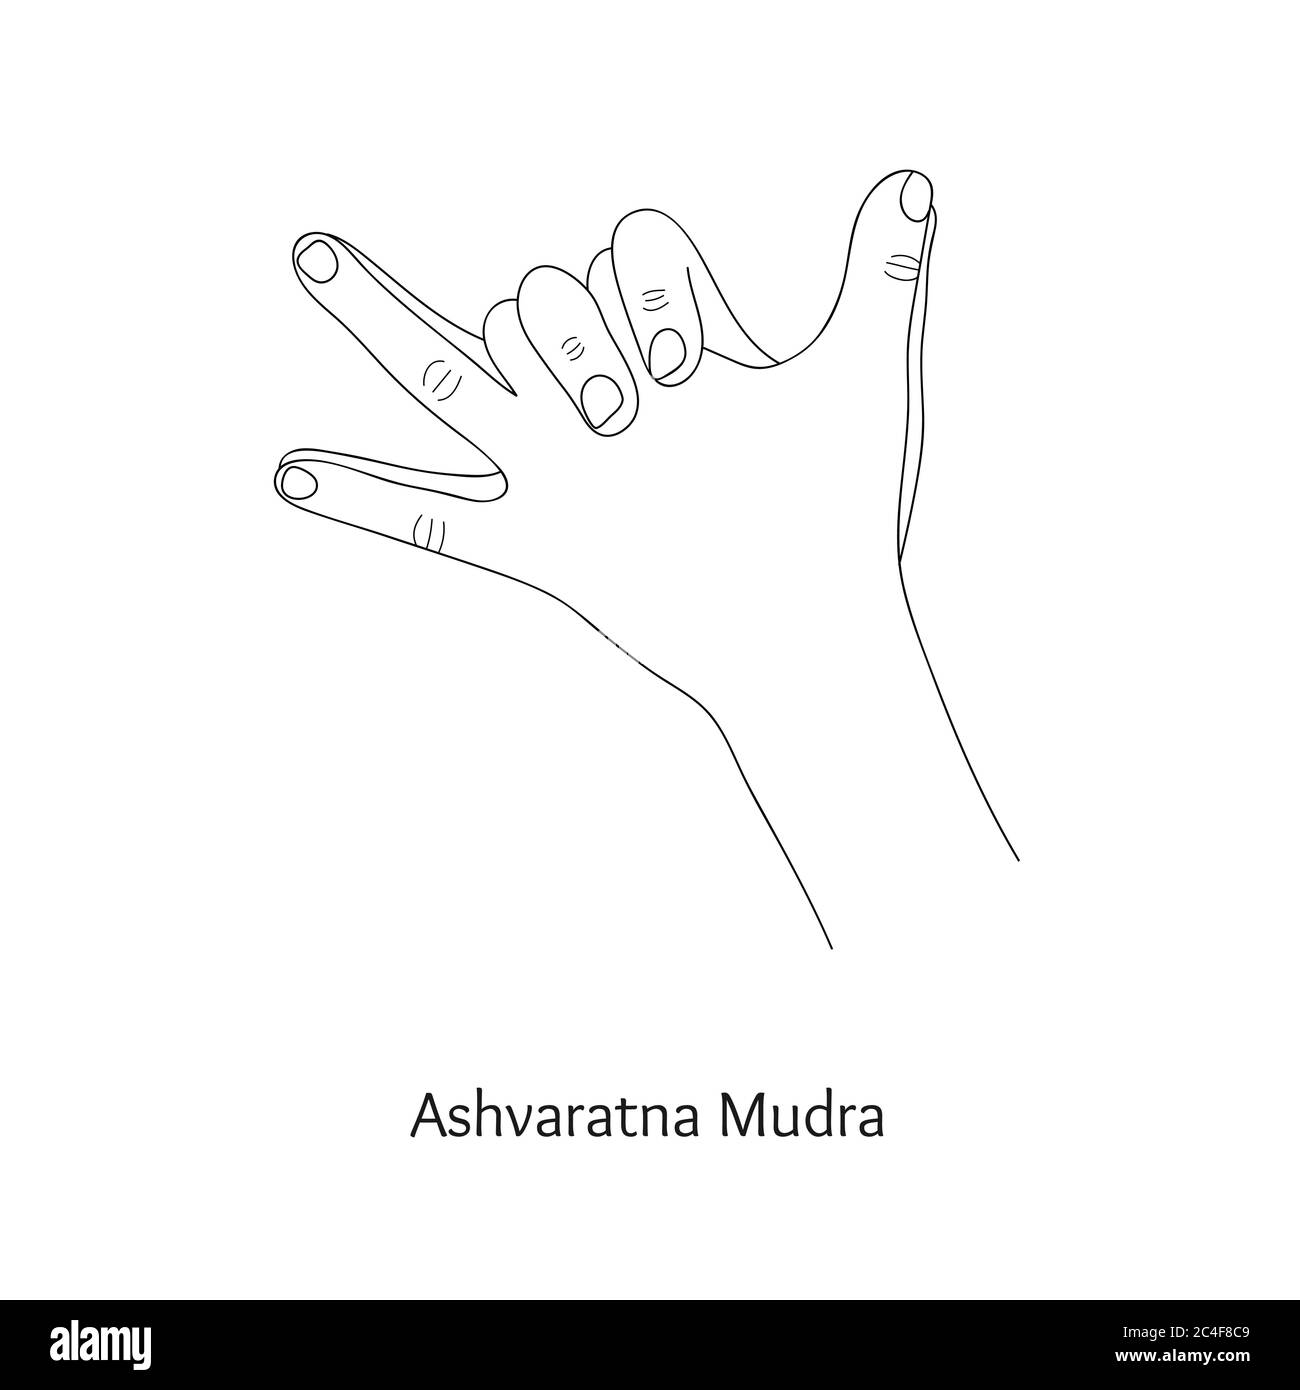 Ashvaratna Mudra / Gesture of Precious Horse. Vettore. Illustrazione Vettoriale